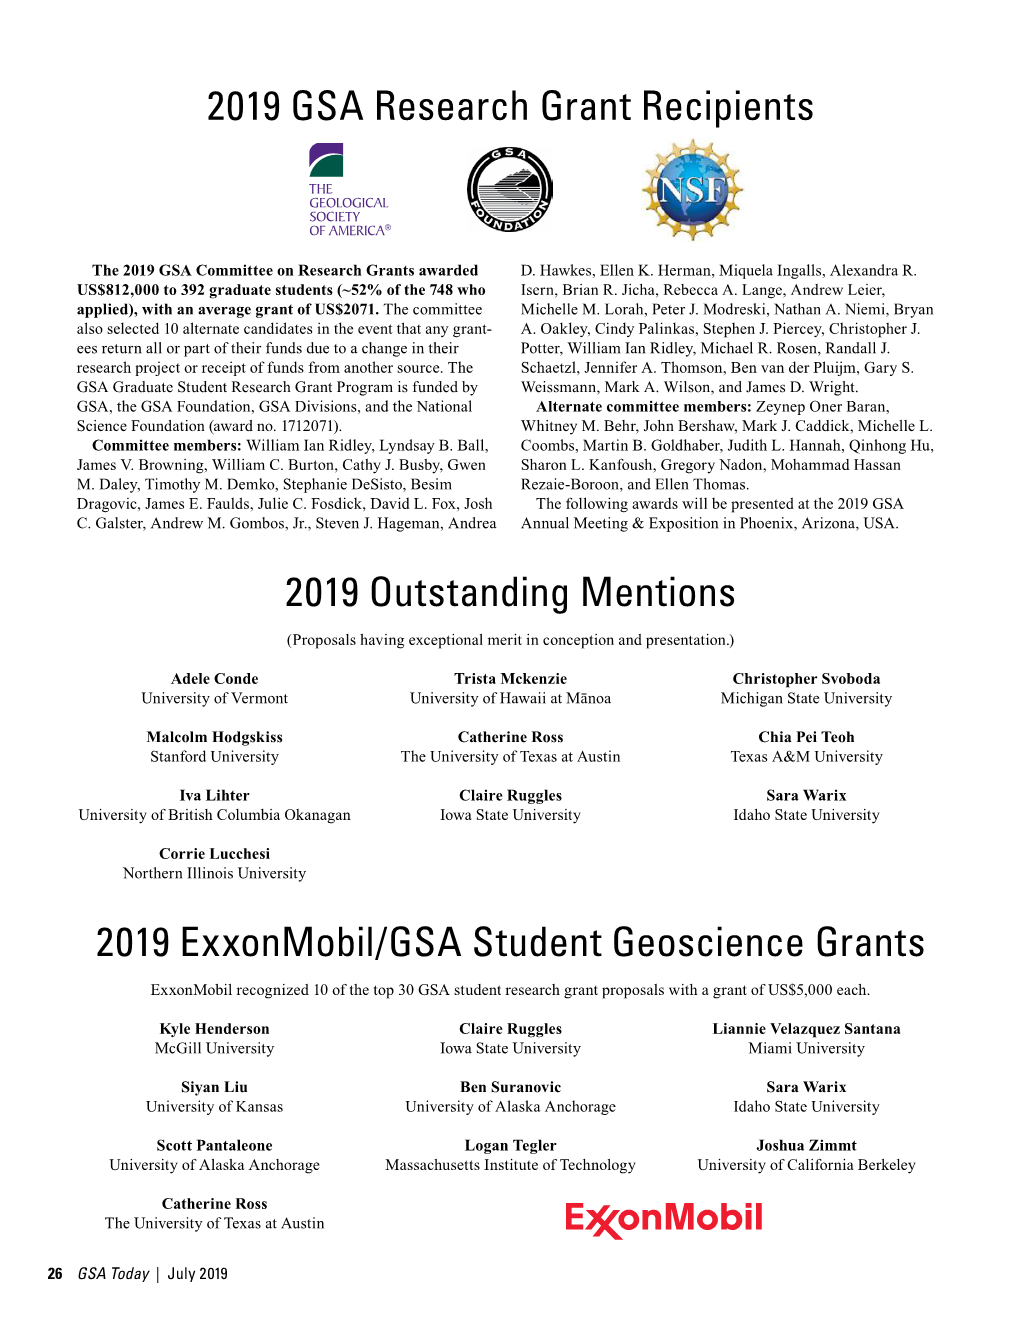 2019 GSA Research Grant Recipients 2019 Outstanding Mentions 2019 Exxonmobil/GSA Student Geoscience Grants